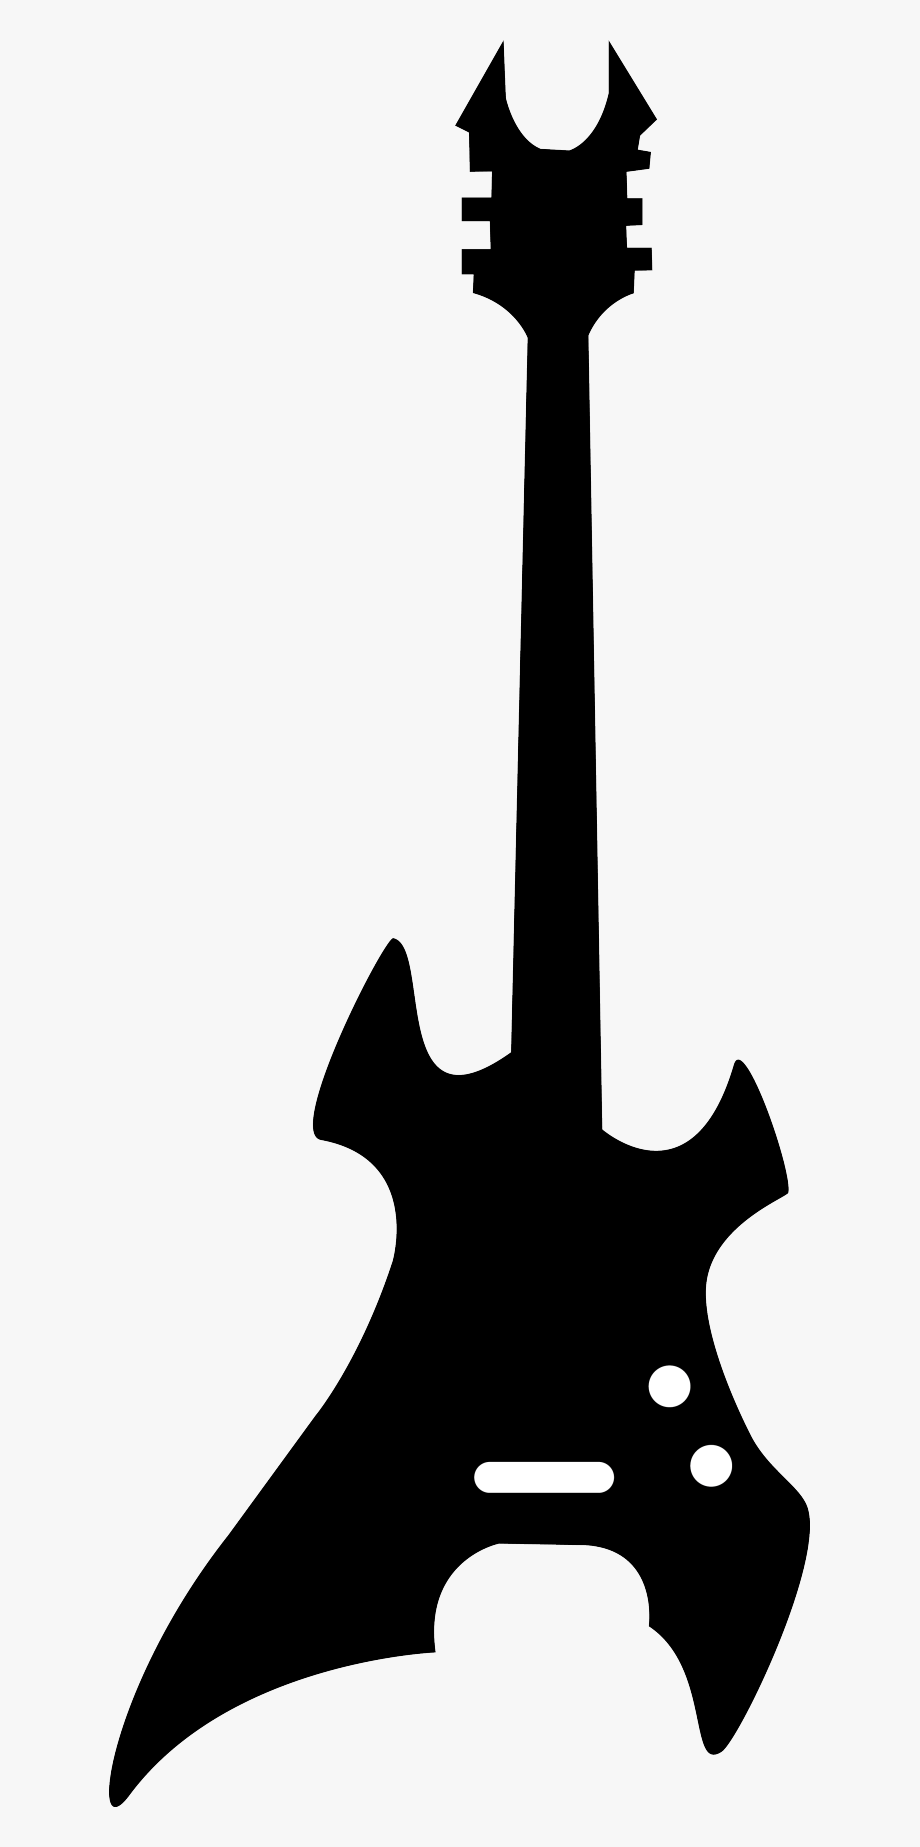 Guitar silhouette clipart.